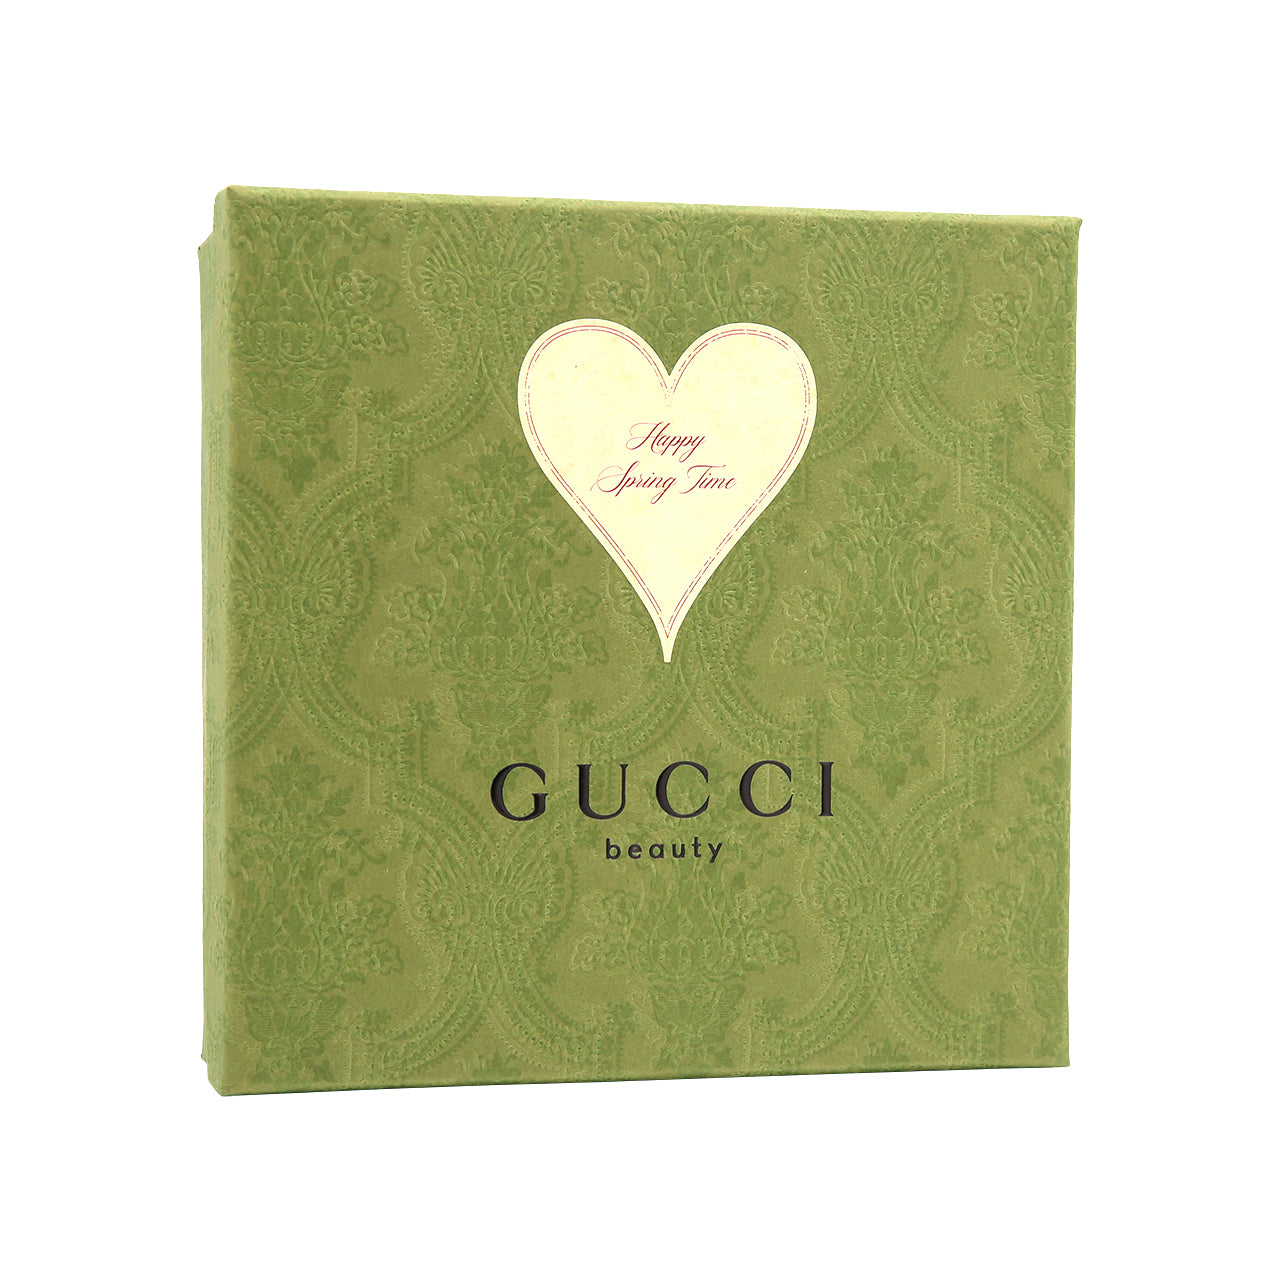 Gucci Bloom Gift Set 2pcs | Sasa Global eShop